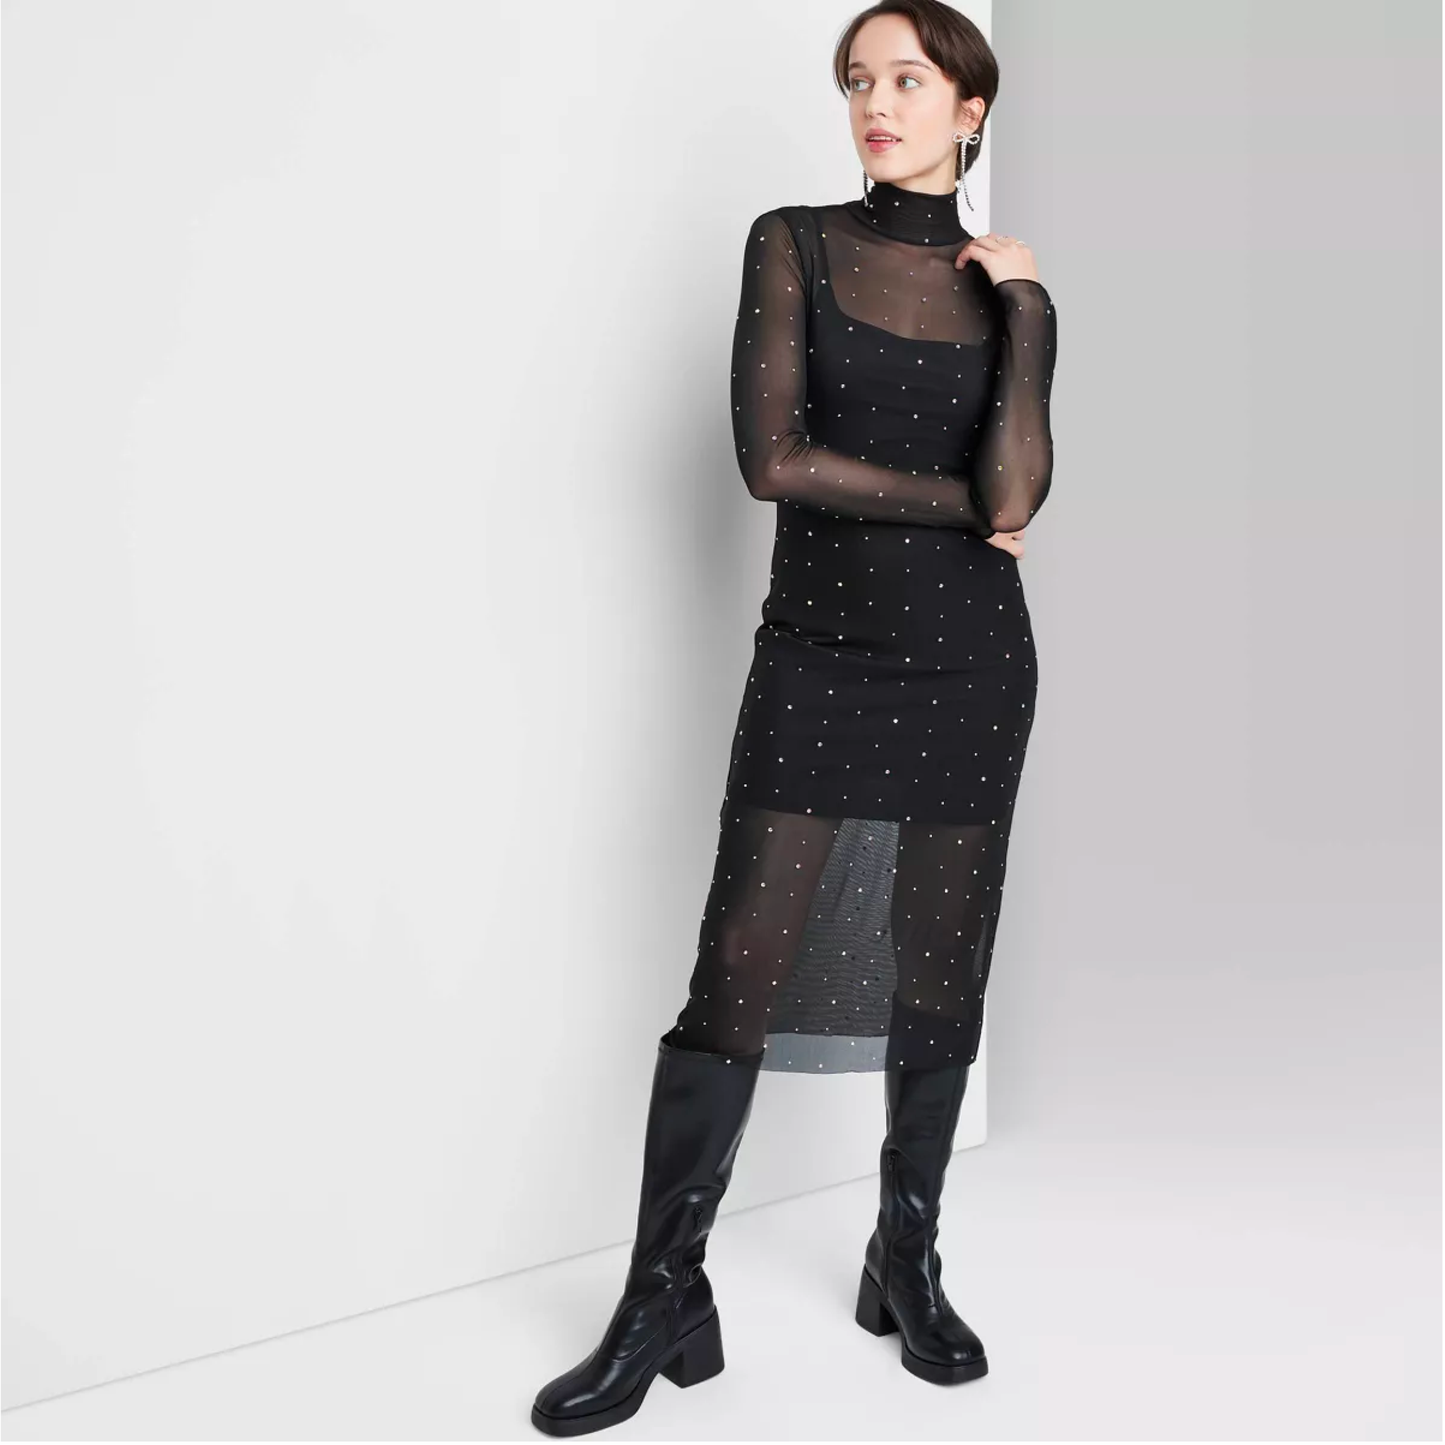 Women's Long Sleeve Cut Out Lurex Bodycon Dress - Wild Fable Black M Medium